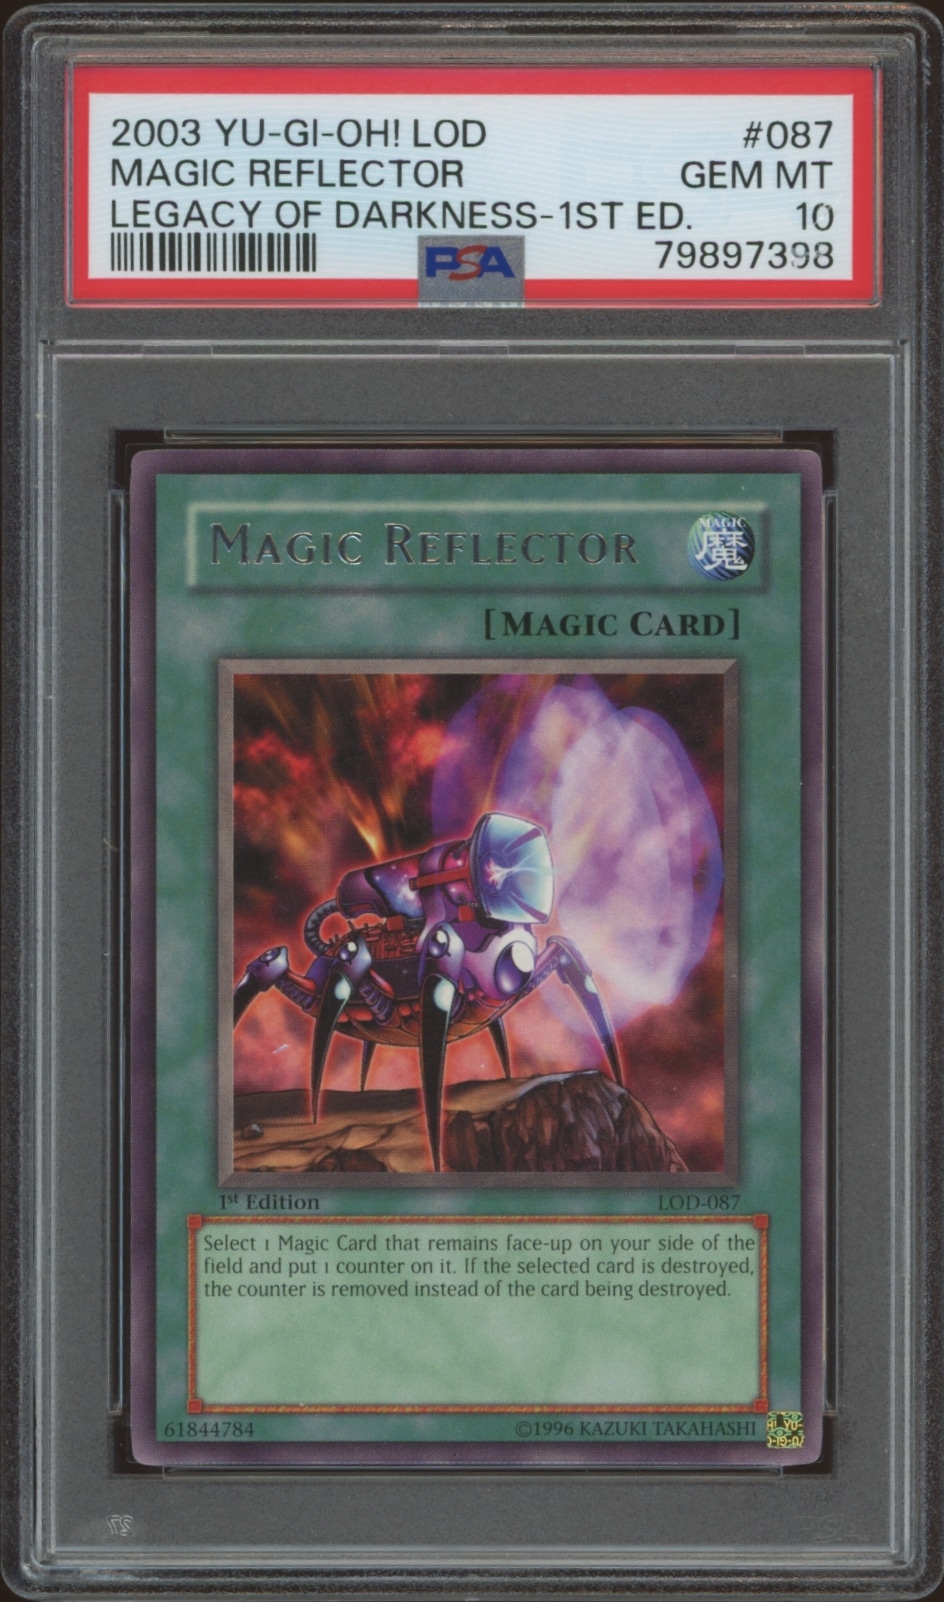 2003 Yu-Gi-Oh! 1st Edition Magic Reflector card in pristine condition, graded PSA 10.